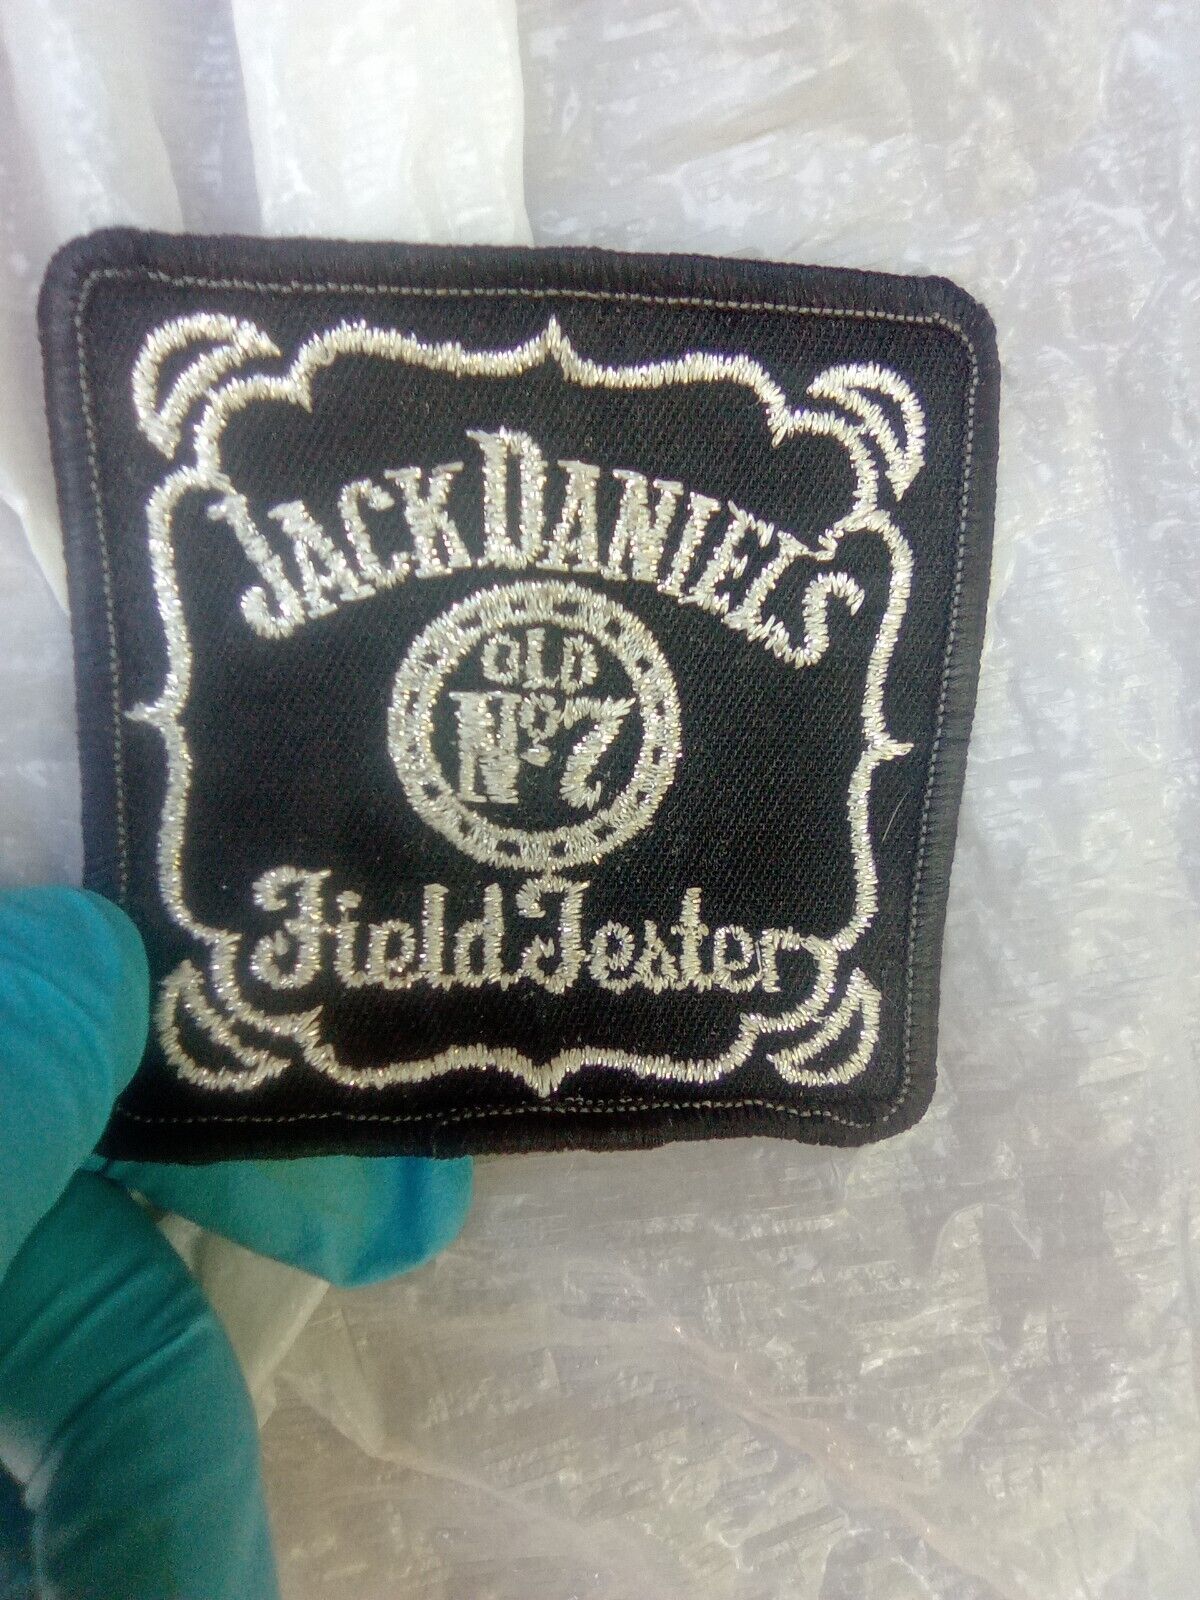 Jack Daniels Old No 7 Patch